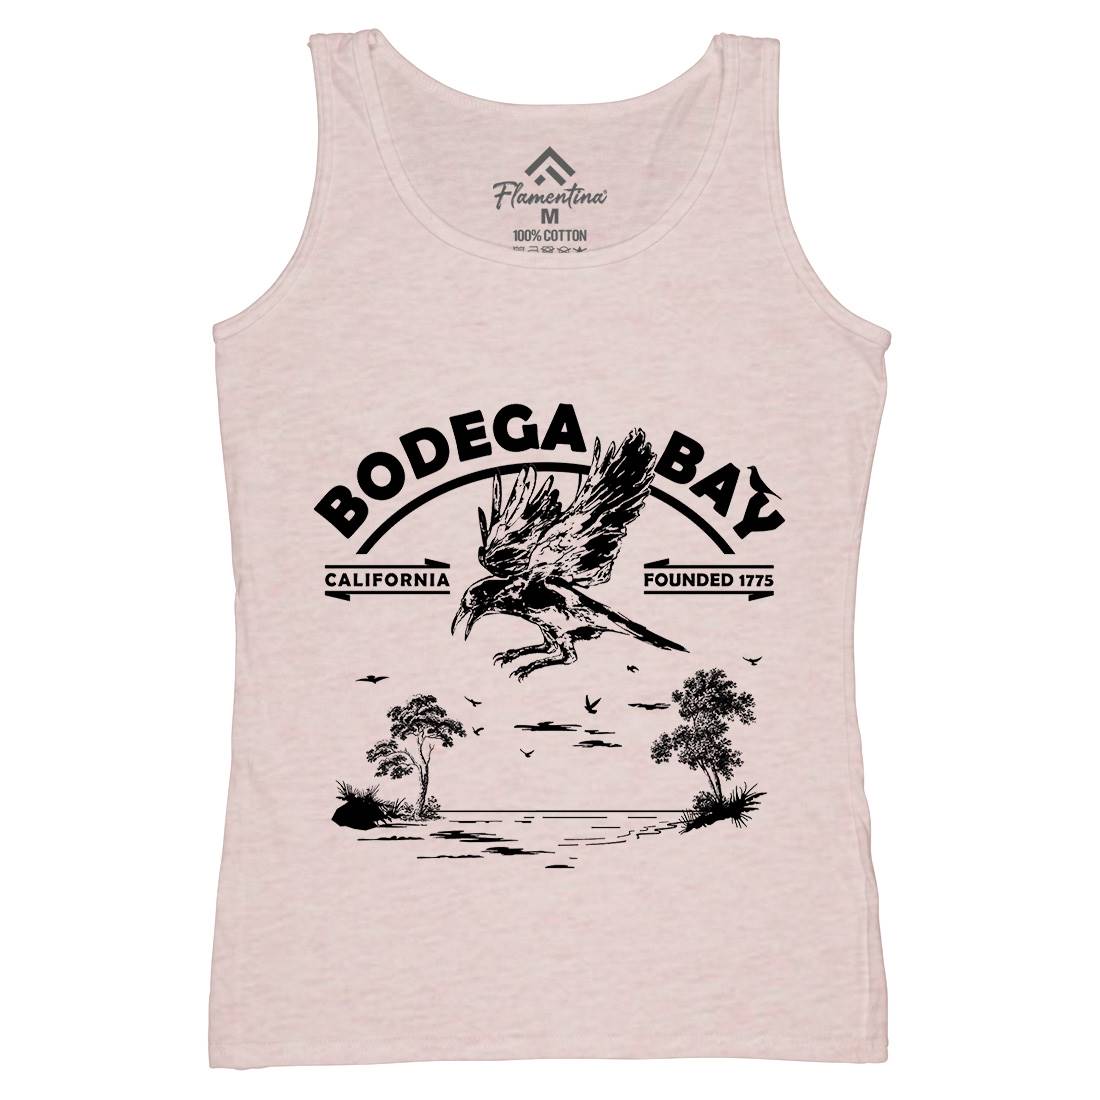 Bodega Bay Womens Organic Tank Top Vest Horror D310